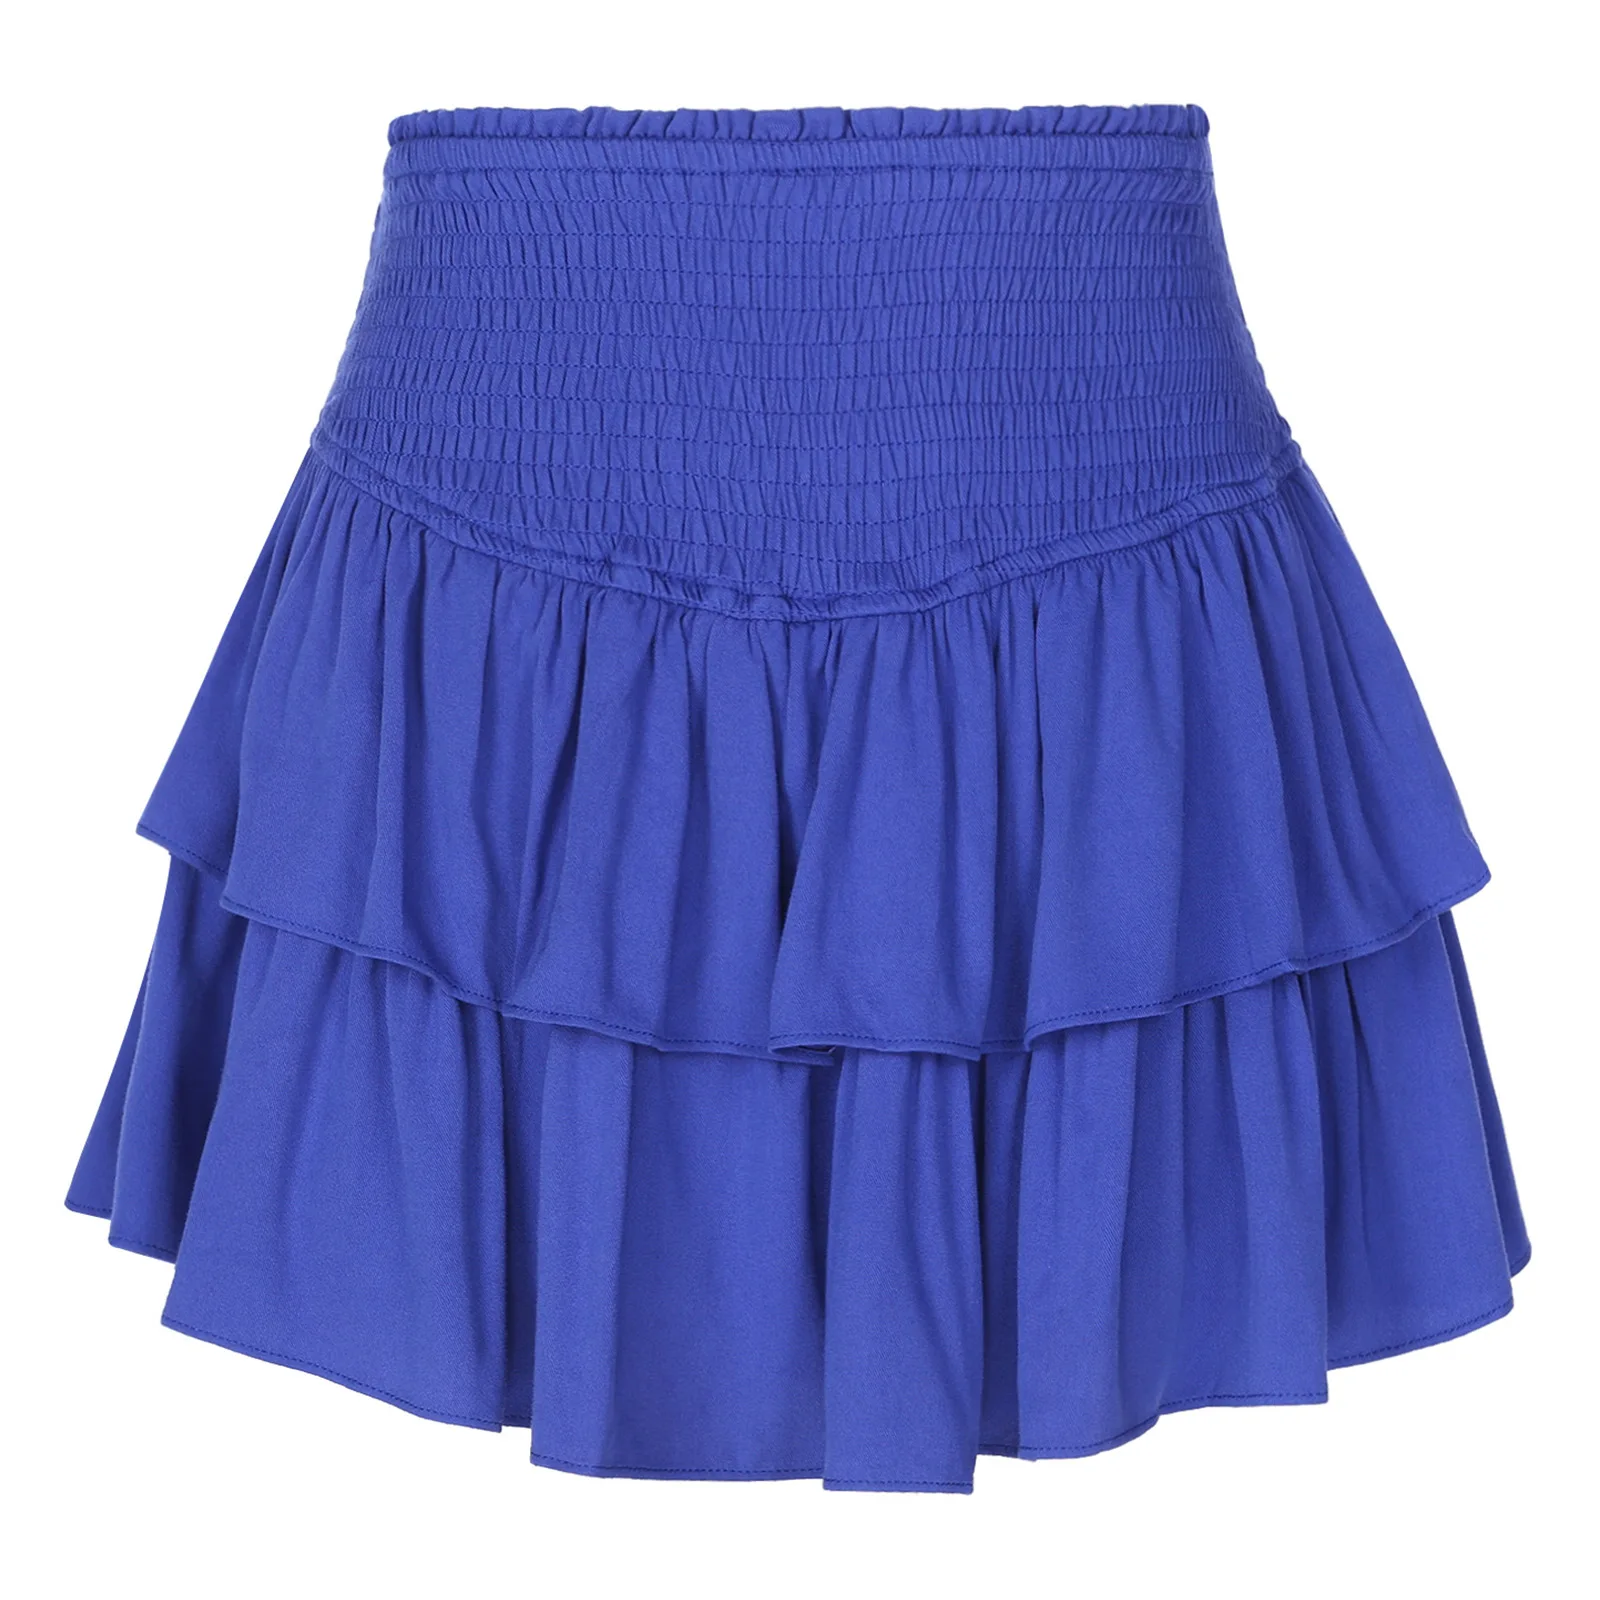 

Womens High Waist Ruffle Skirt Solid Color Shirring Elastic Waistband Skirts Built-In Shorts Layered Miniskirt